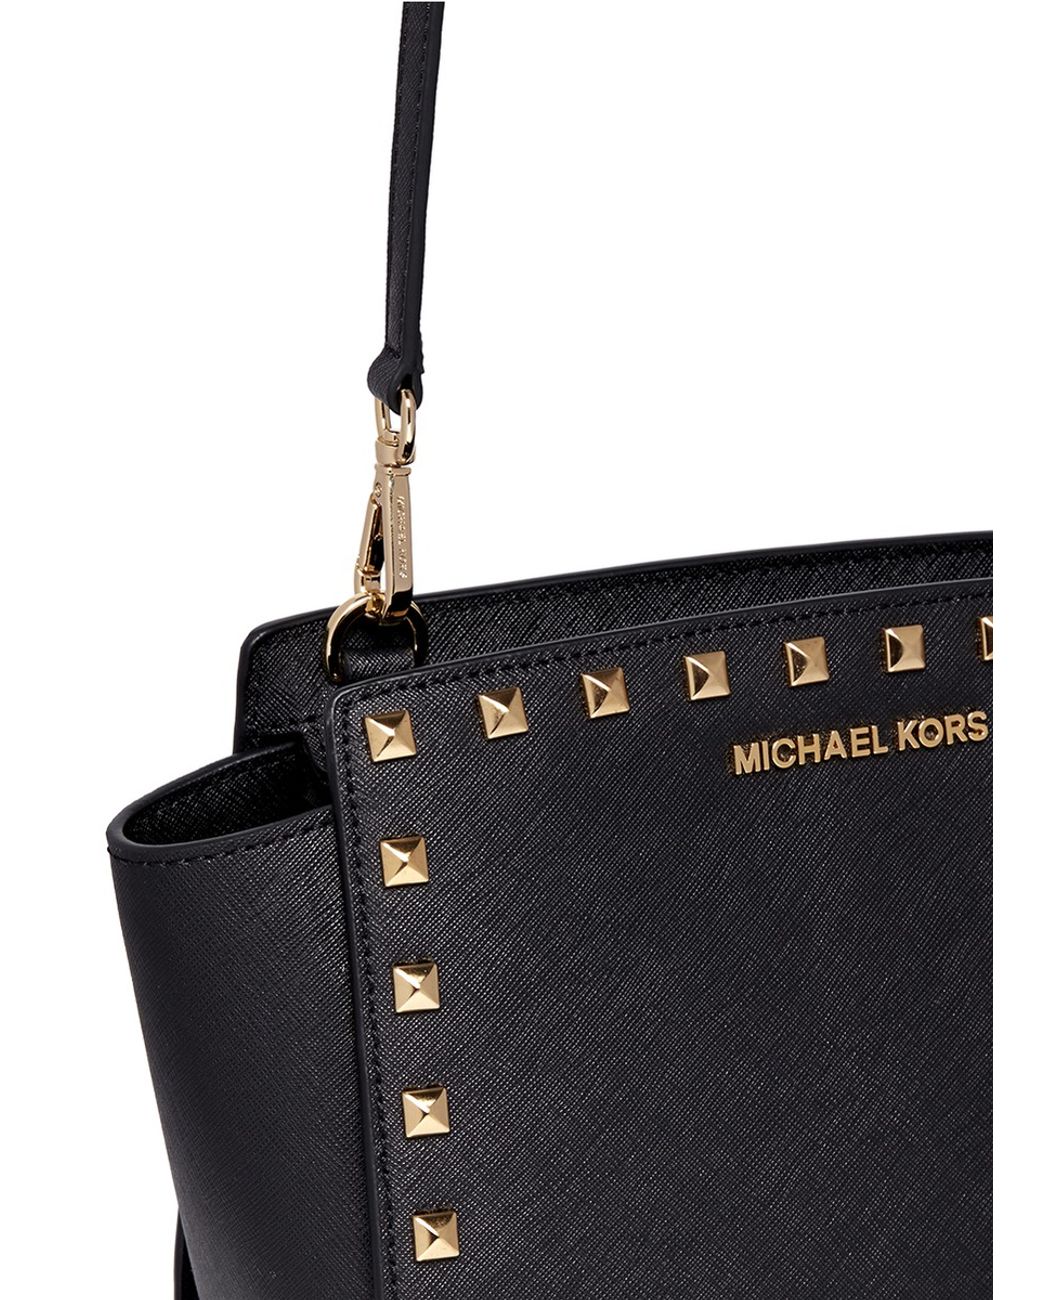 Michael Kors Selma Studded Saffiano-Leather Cross-Body Bag in Black | Lyst